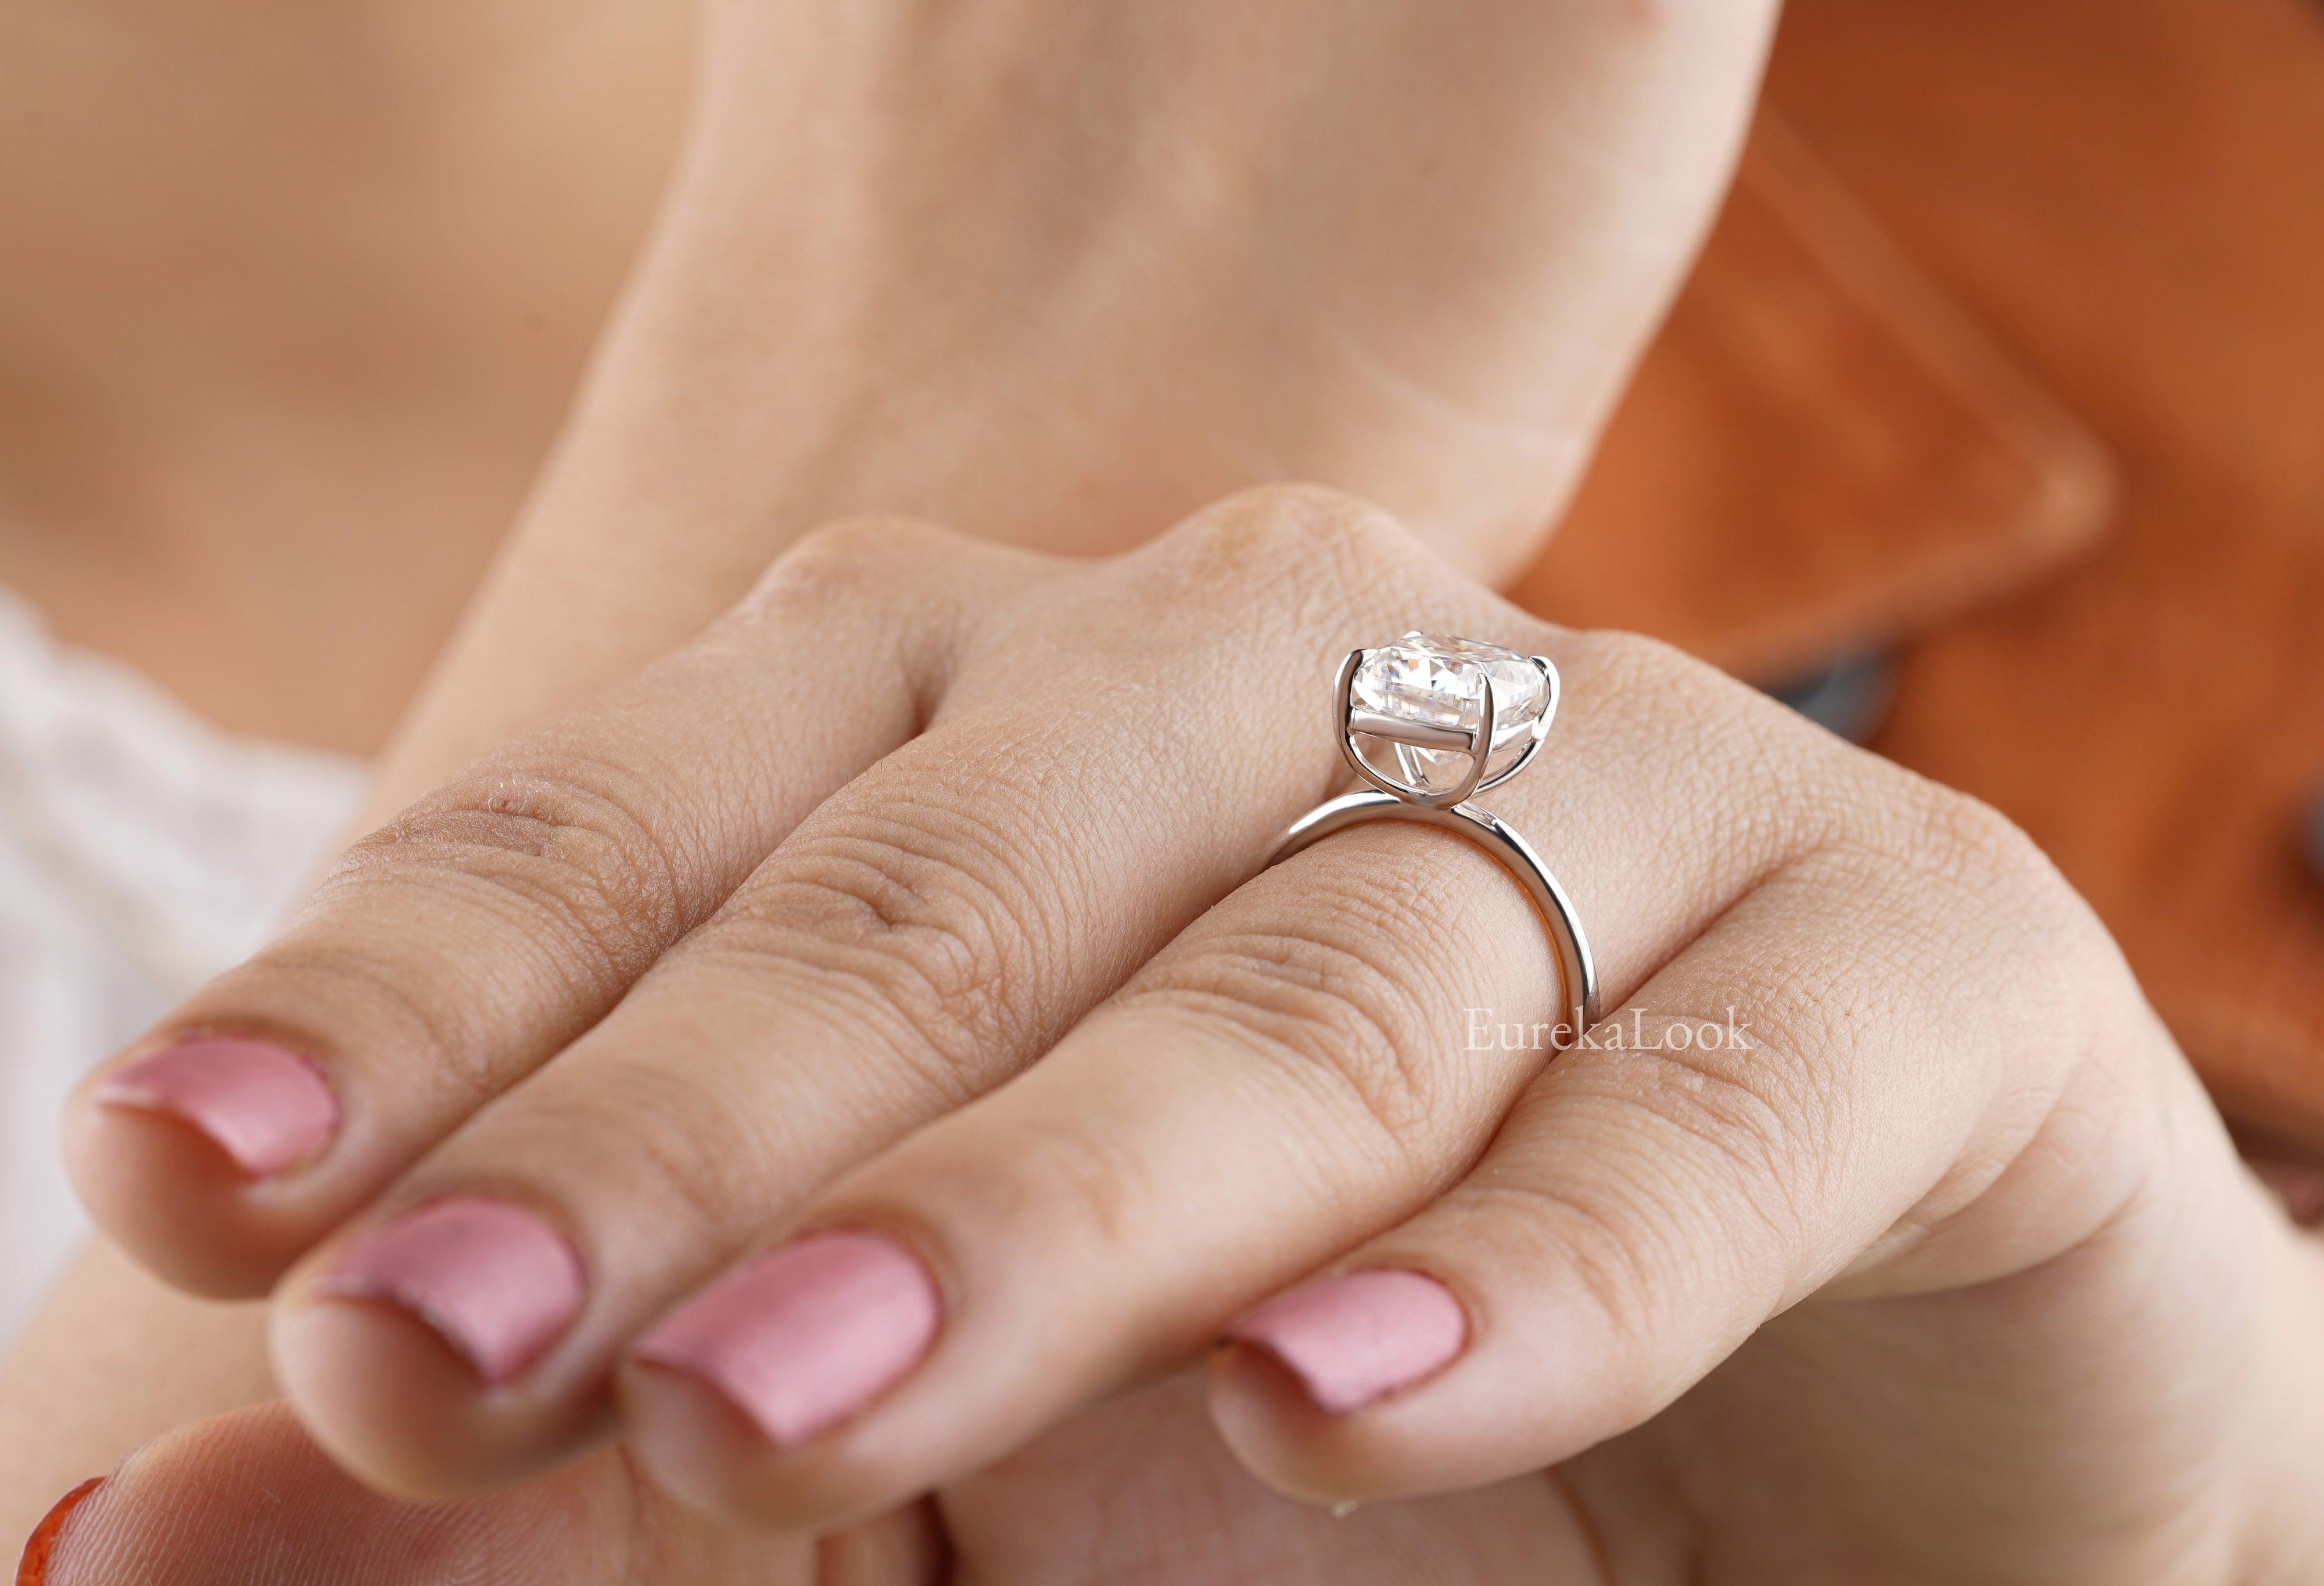 Cushion Cut Moissanite Diamond Engagement Ring - Eurekalook